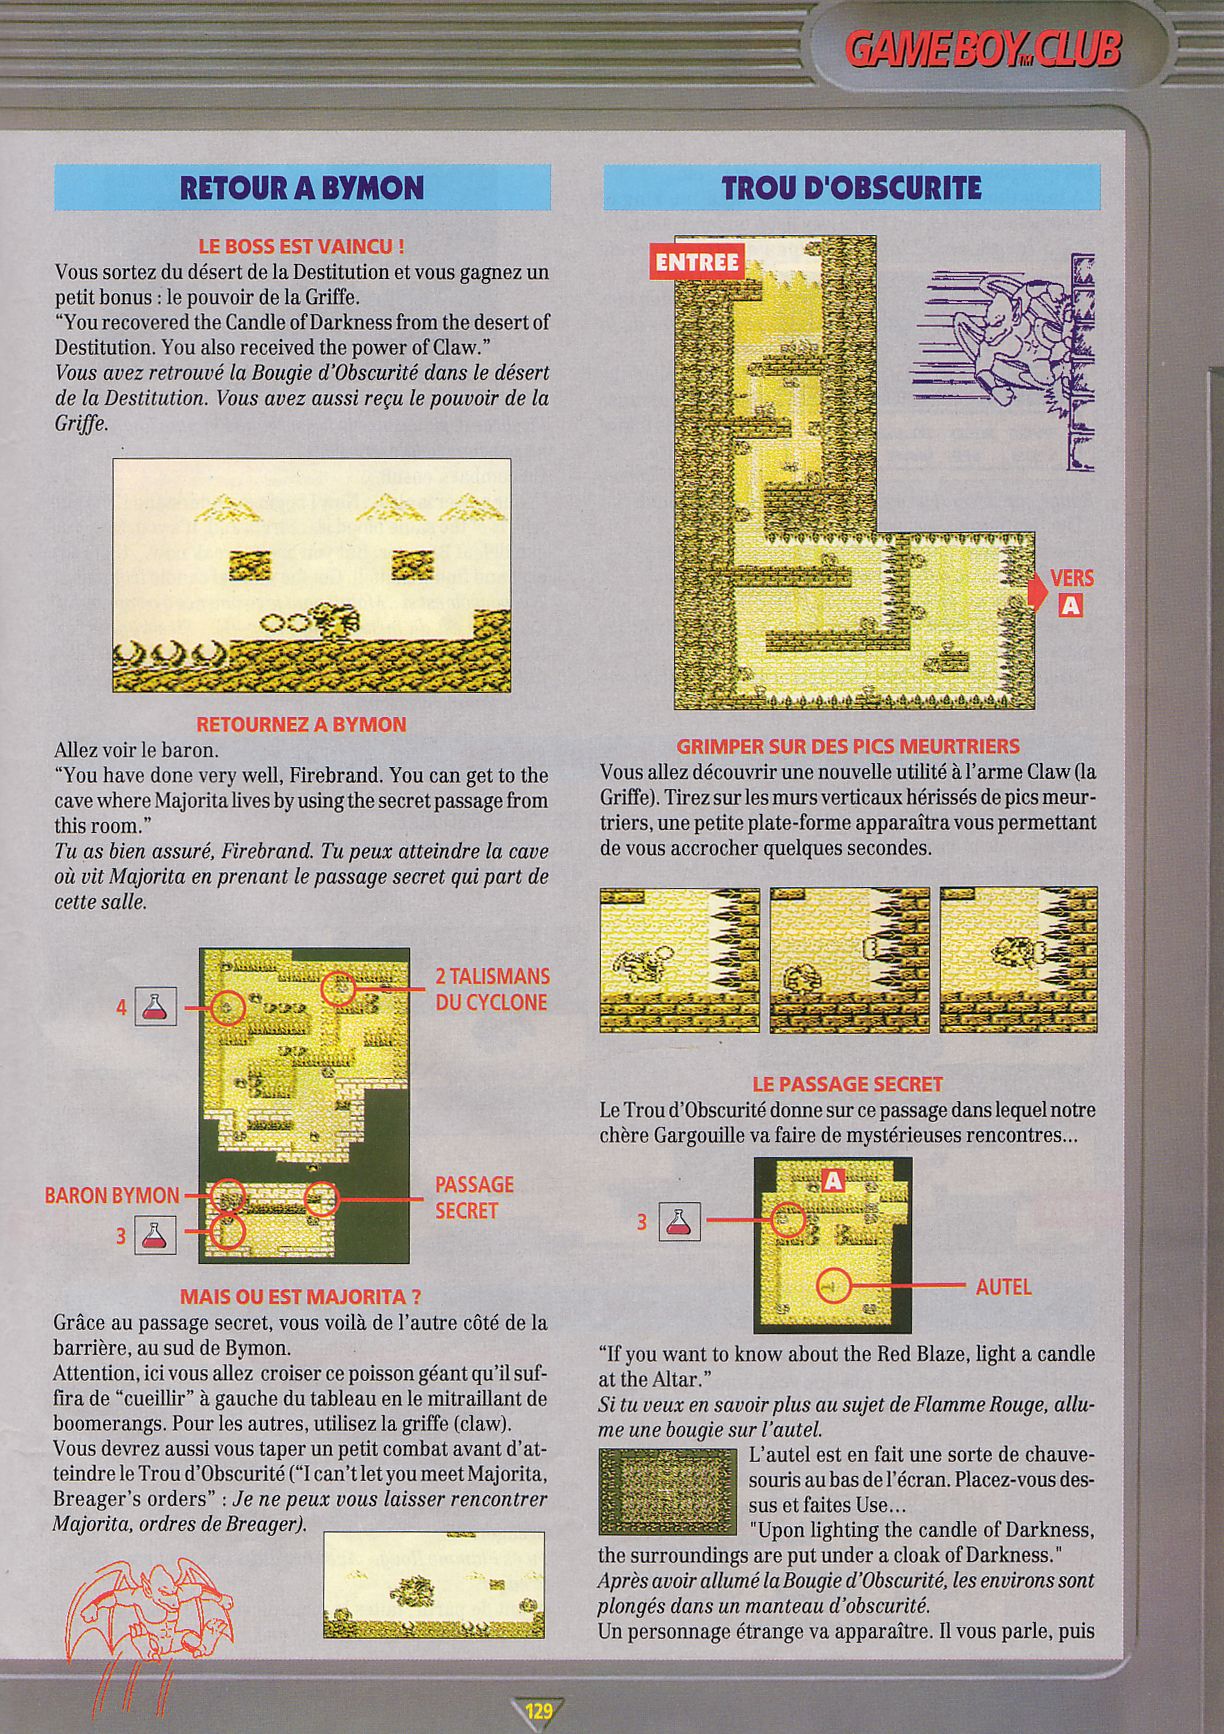 tests//1155/Nintendo Player 007 - Page 129 (1992-11-12).jpg